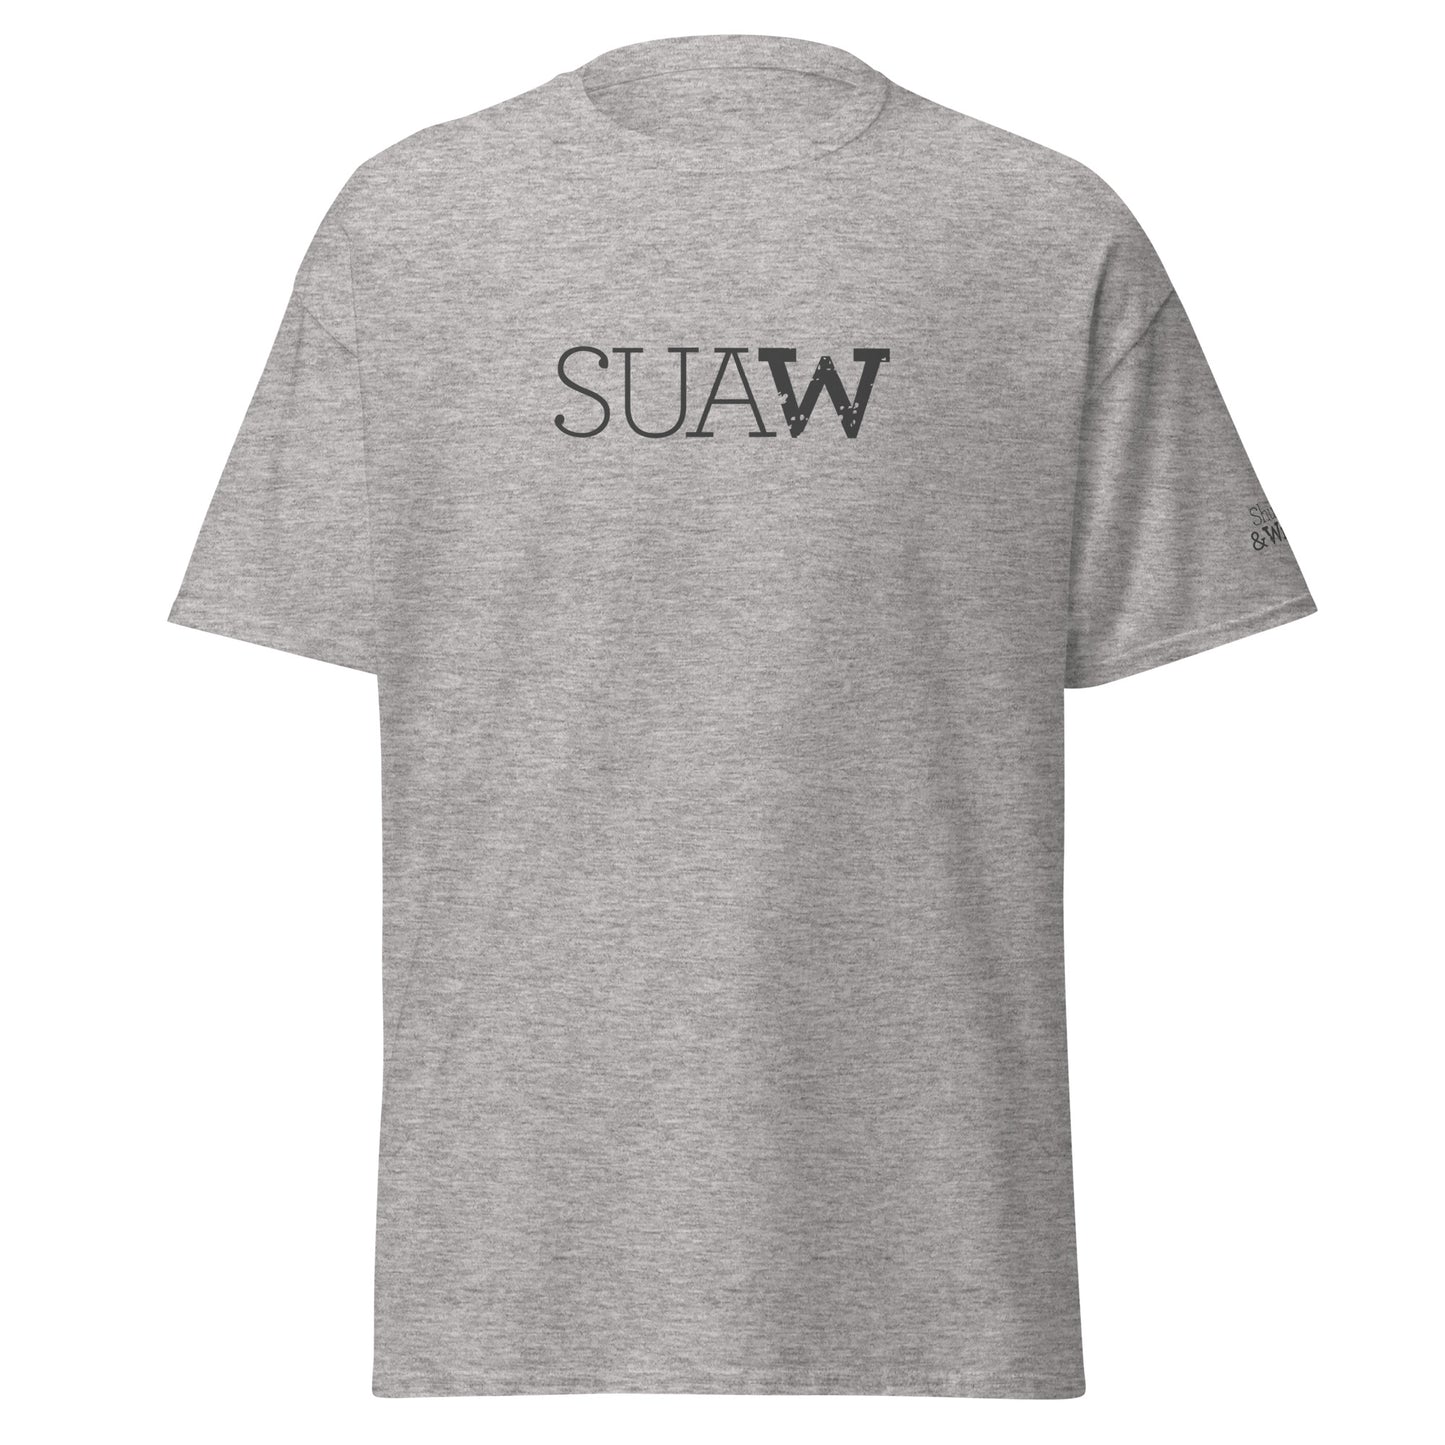 SUAW Unisex T-Shirt